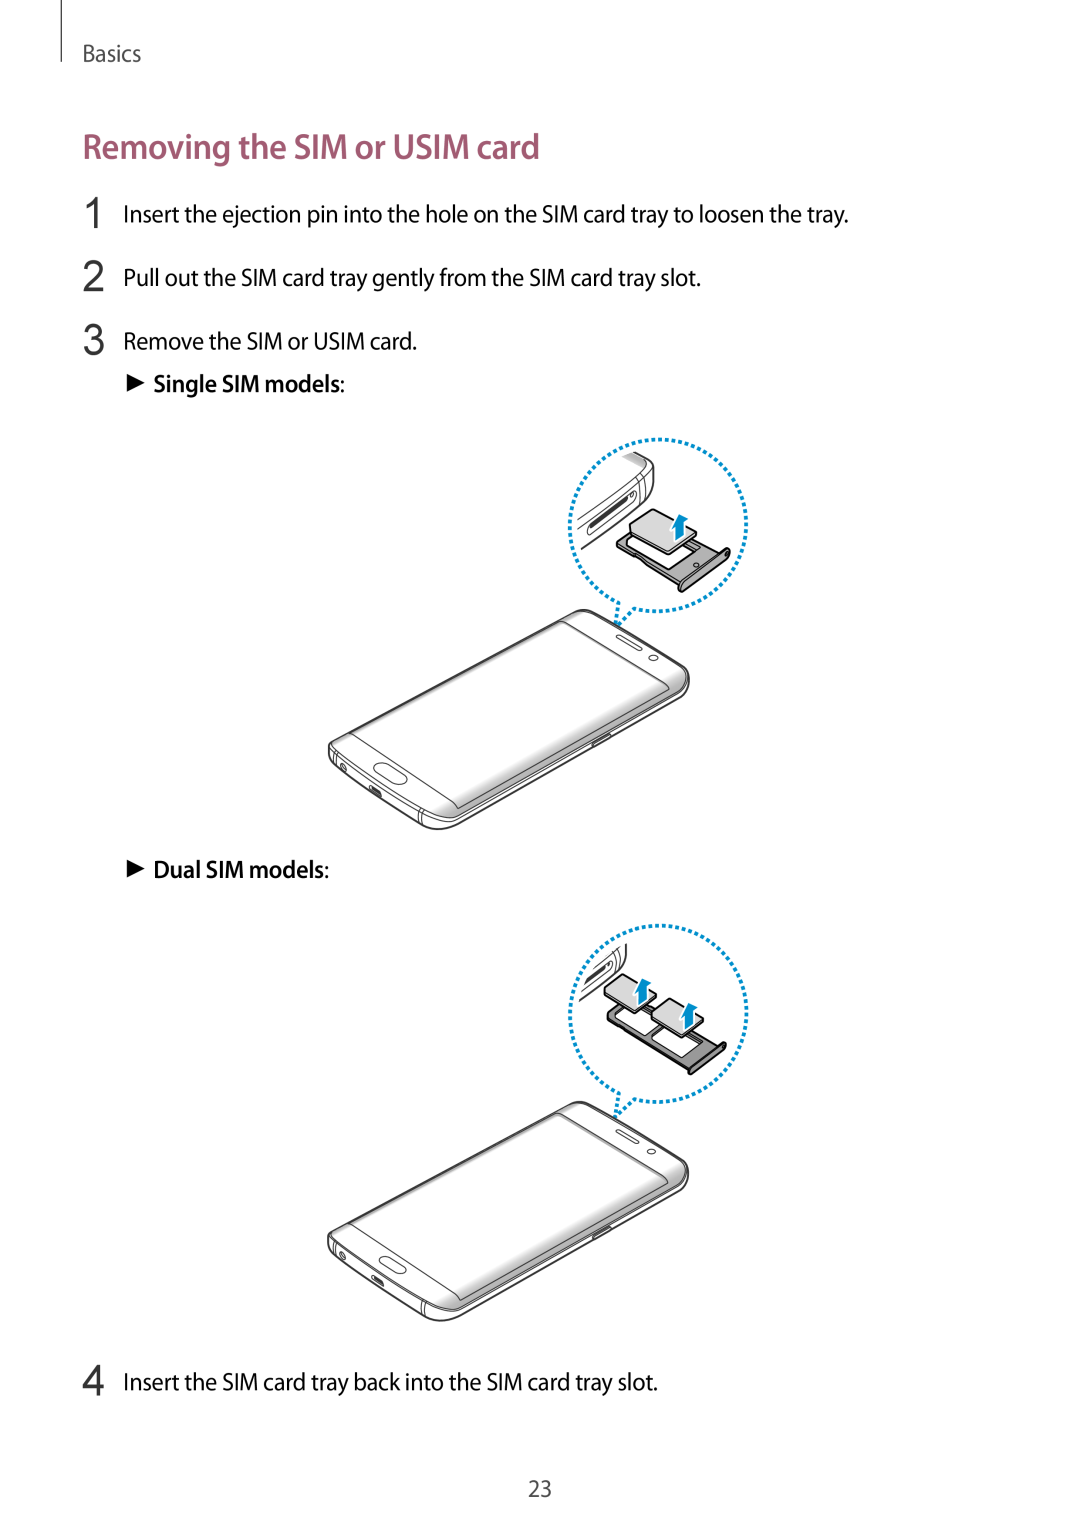 Samsung SM-G925FZKAXEF manual Removing the SIM or USIM card, Basics, Remove the SIM or USIM card, Single SIM models 